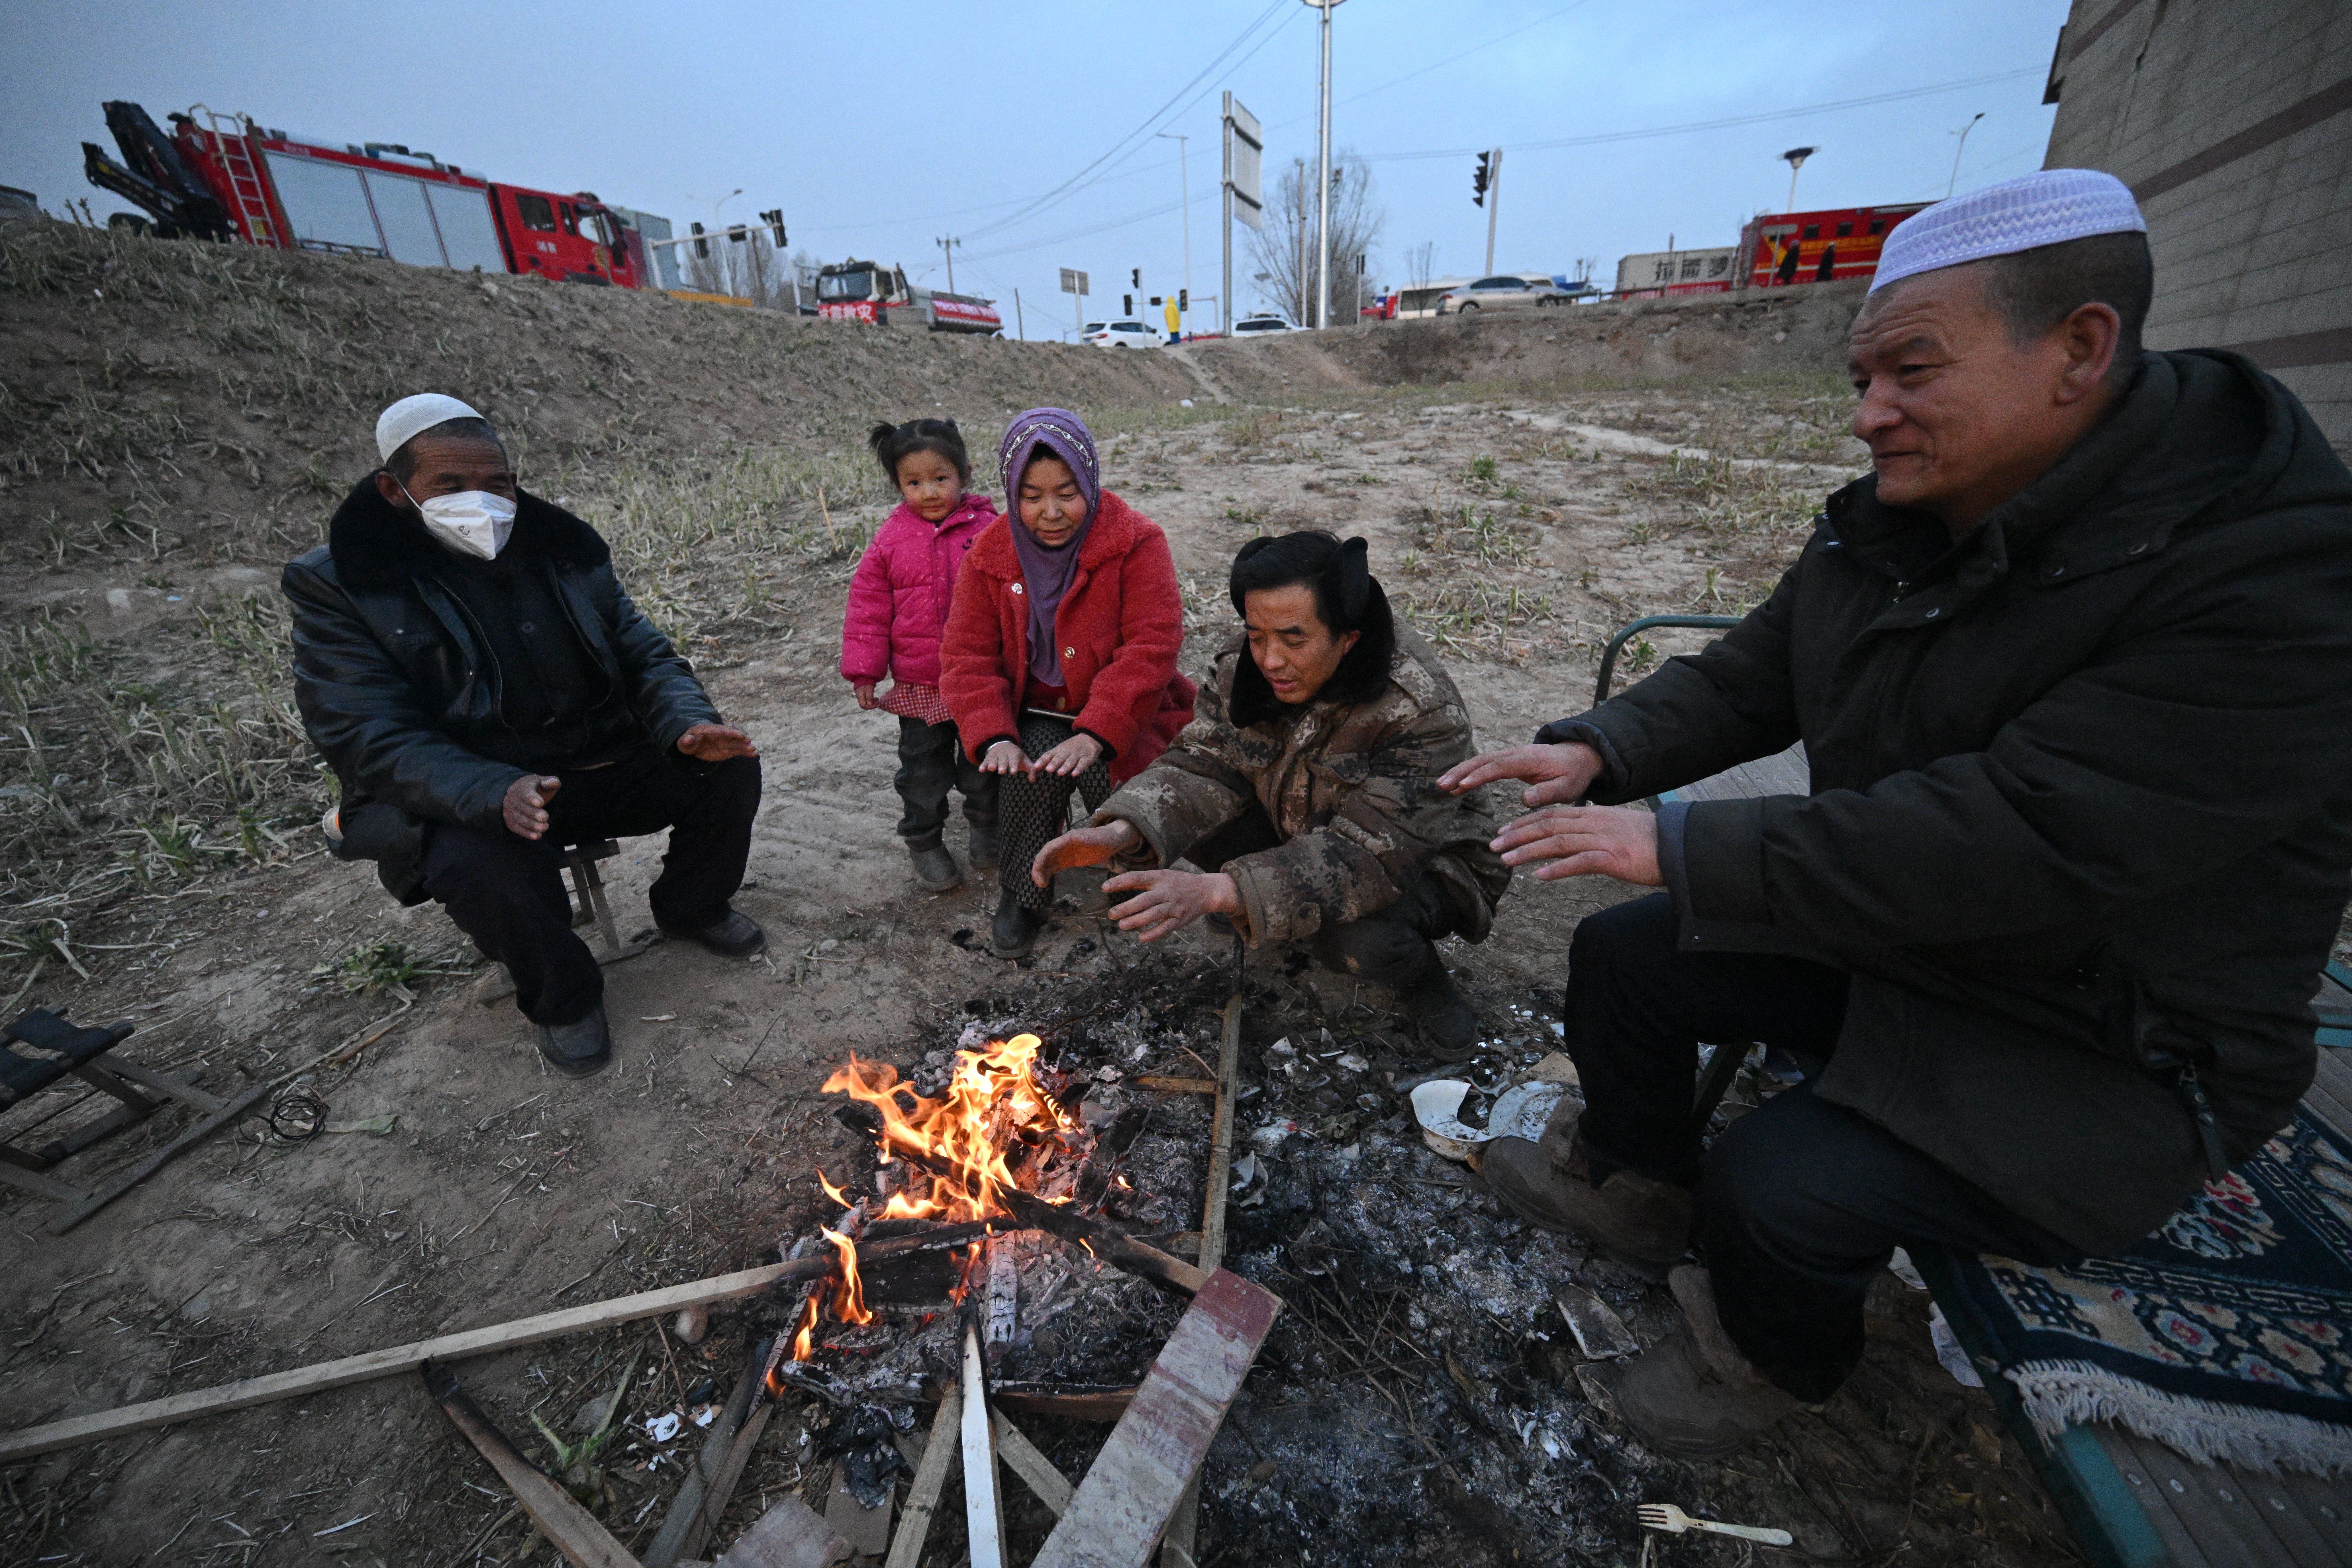 People gather next to a fire after an earthquake in Dahejia, Jishishan County in northwest China's Gansu